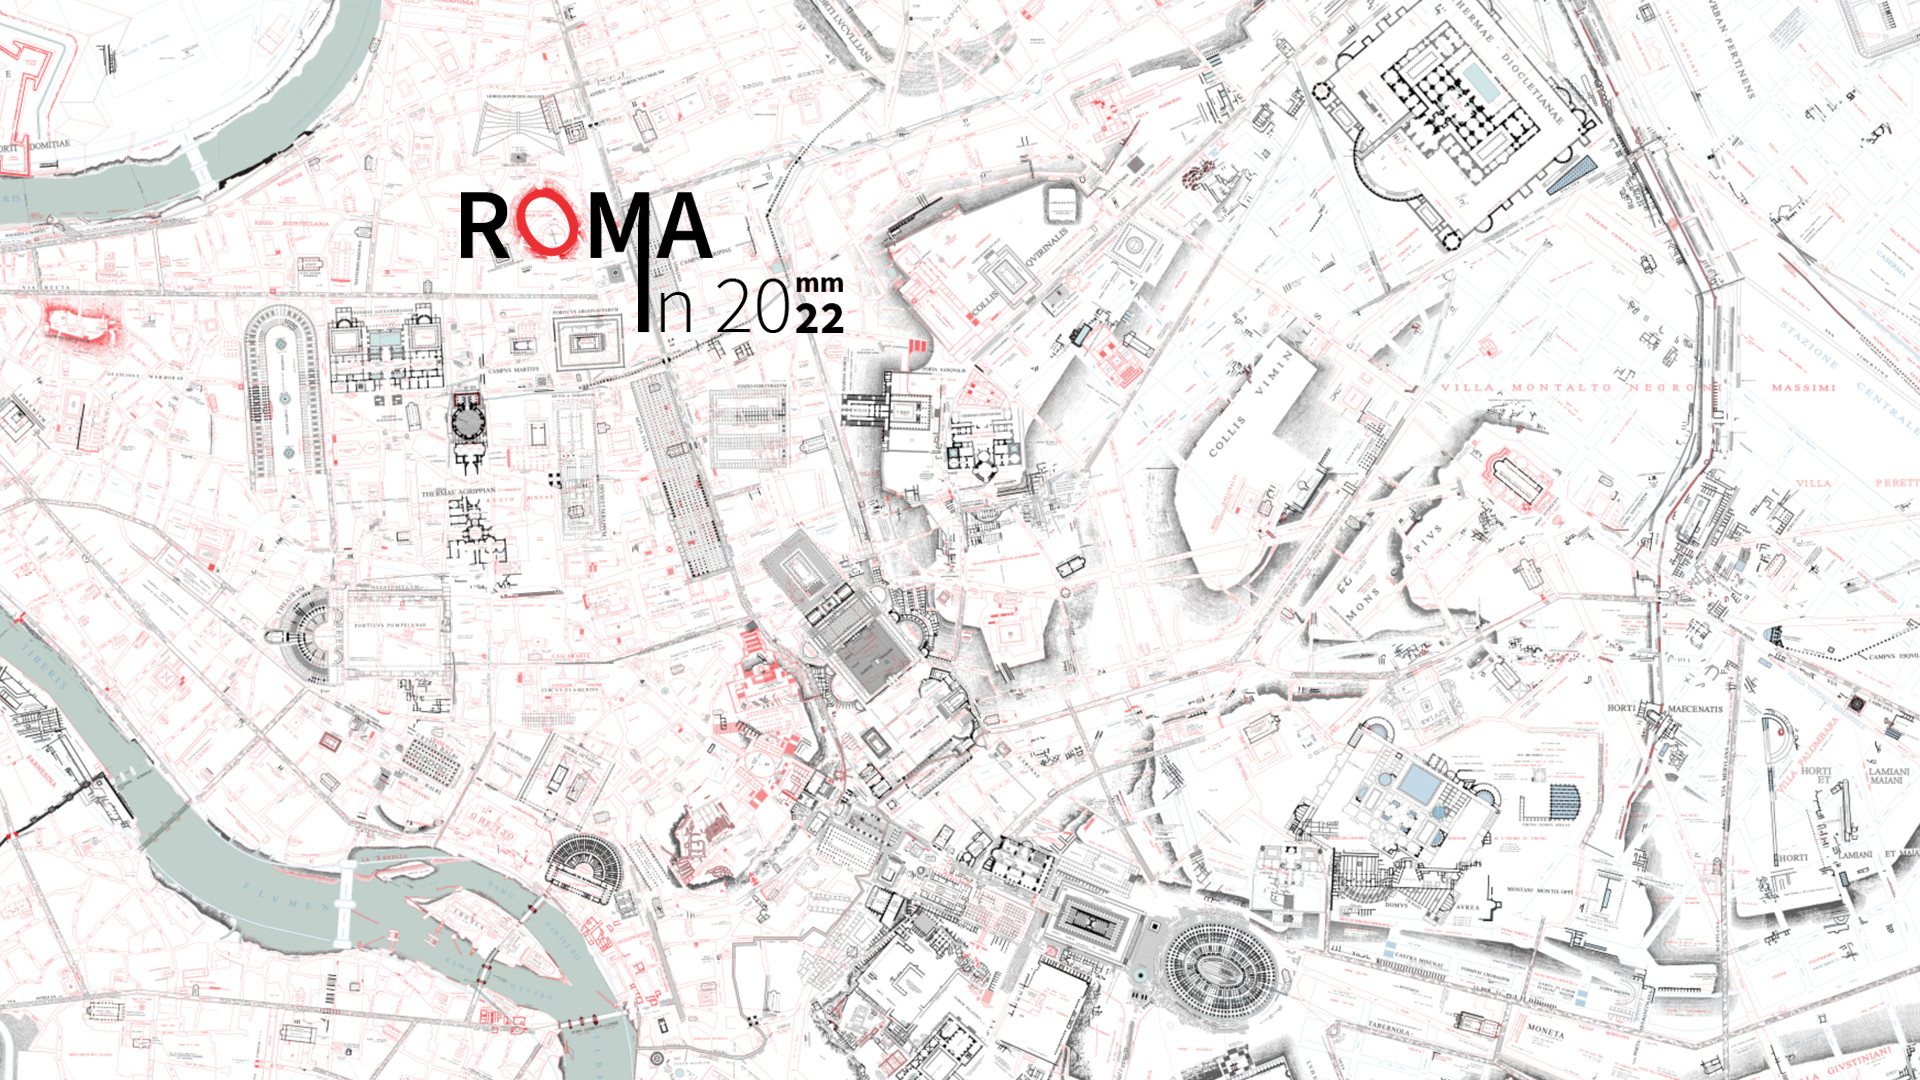 ROMA 20mm22 landscape